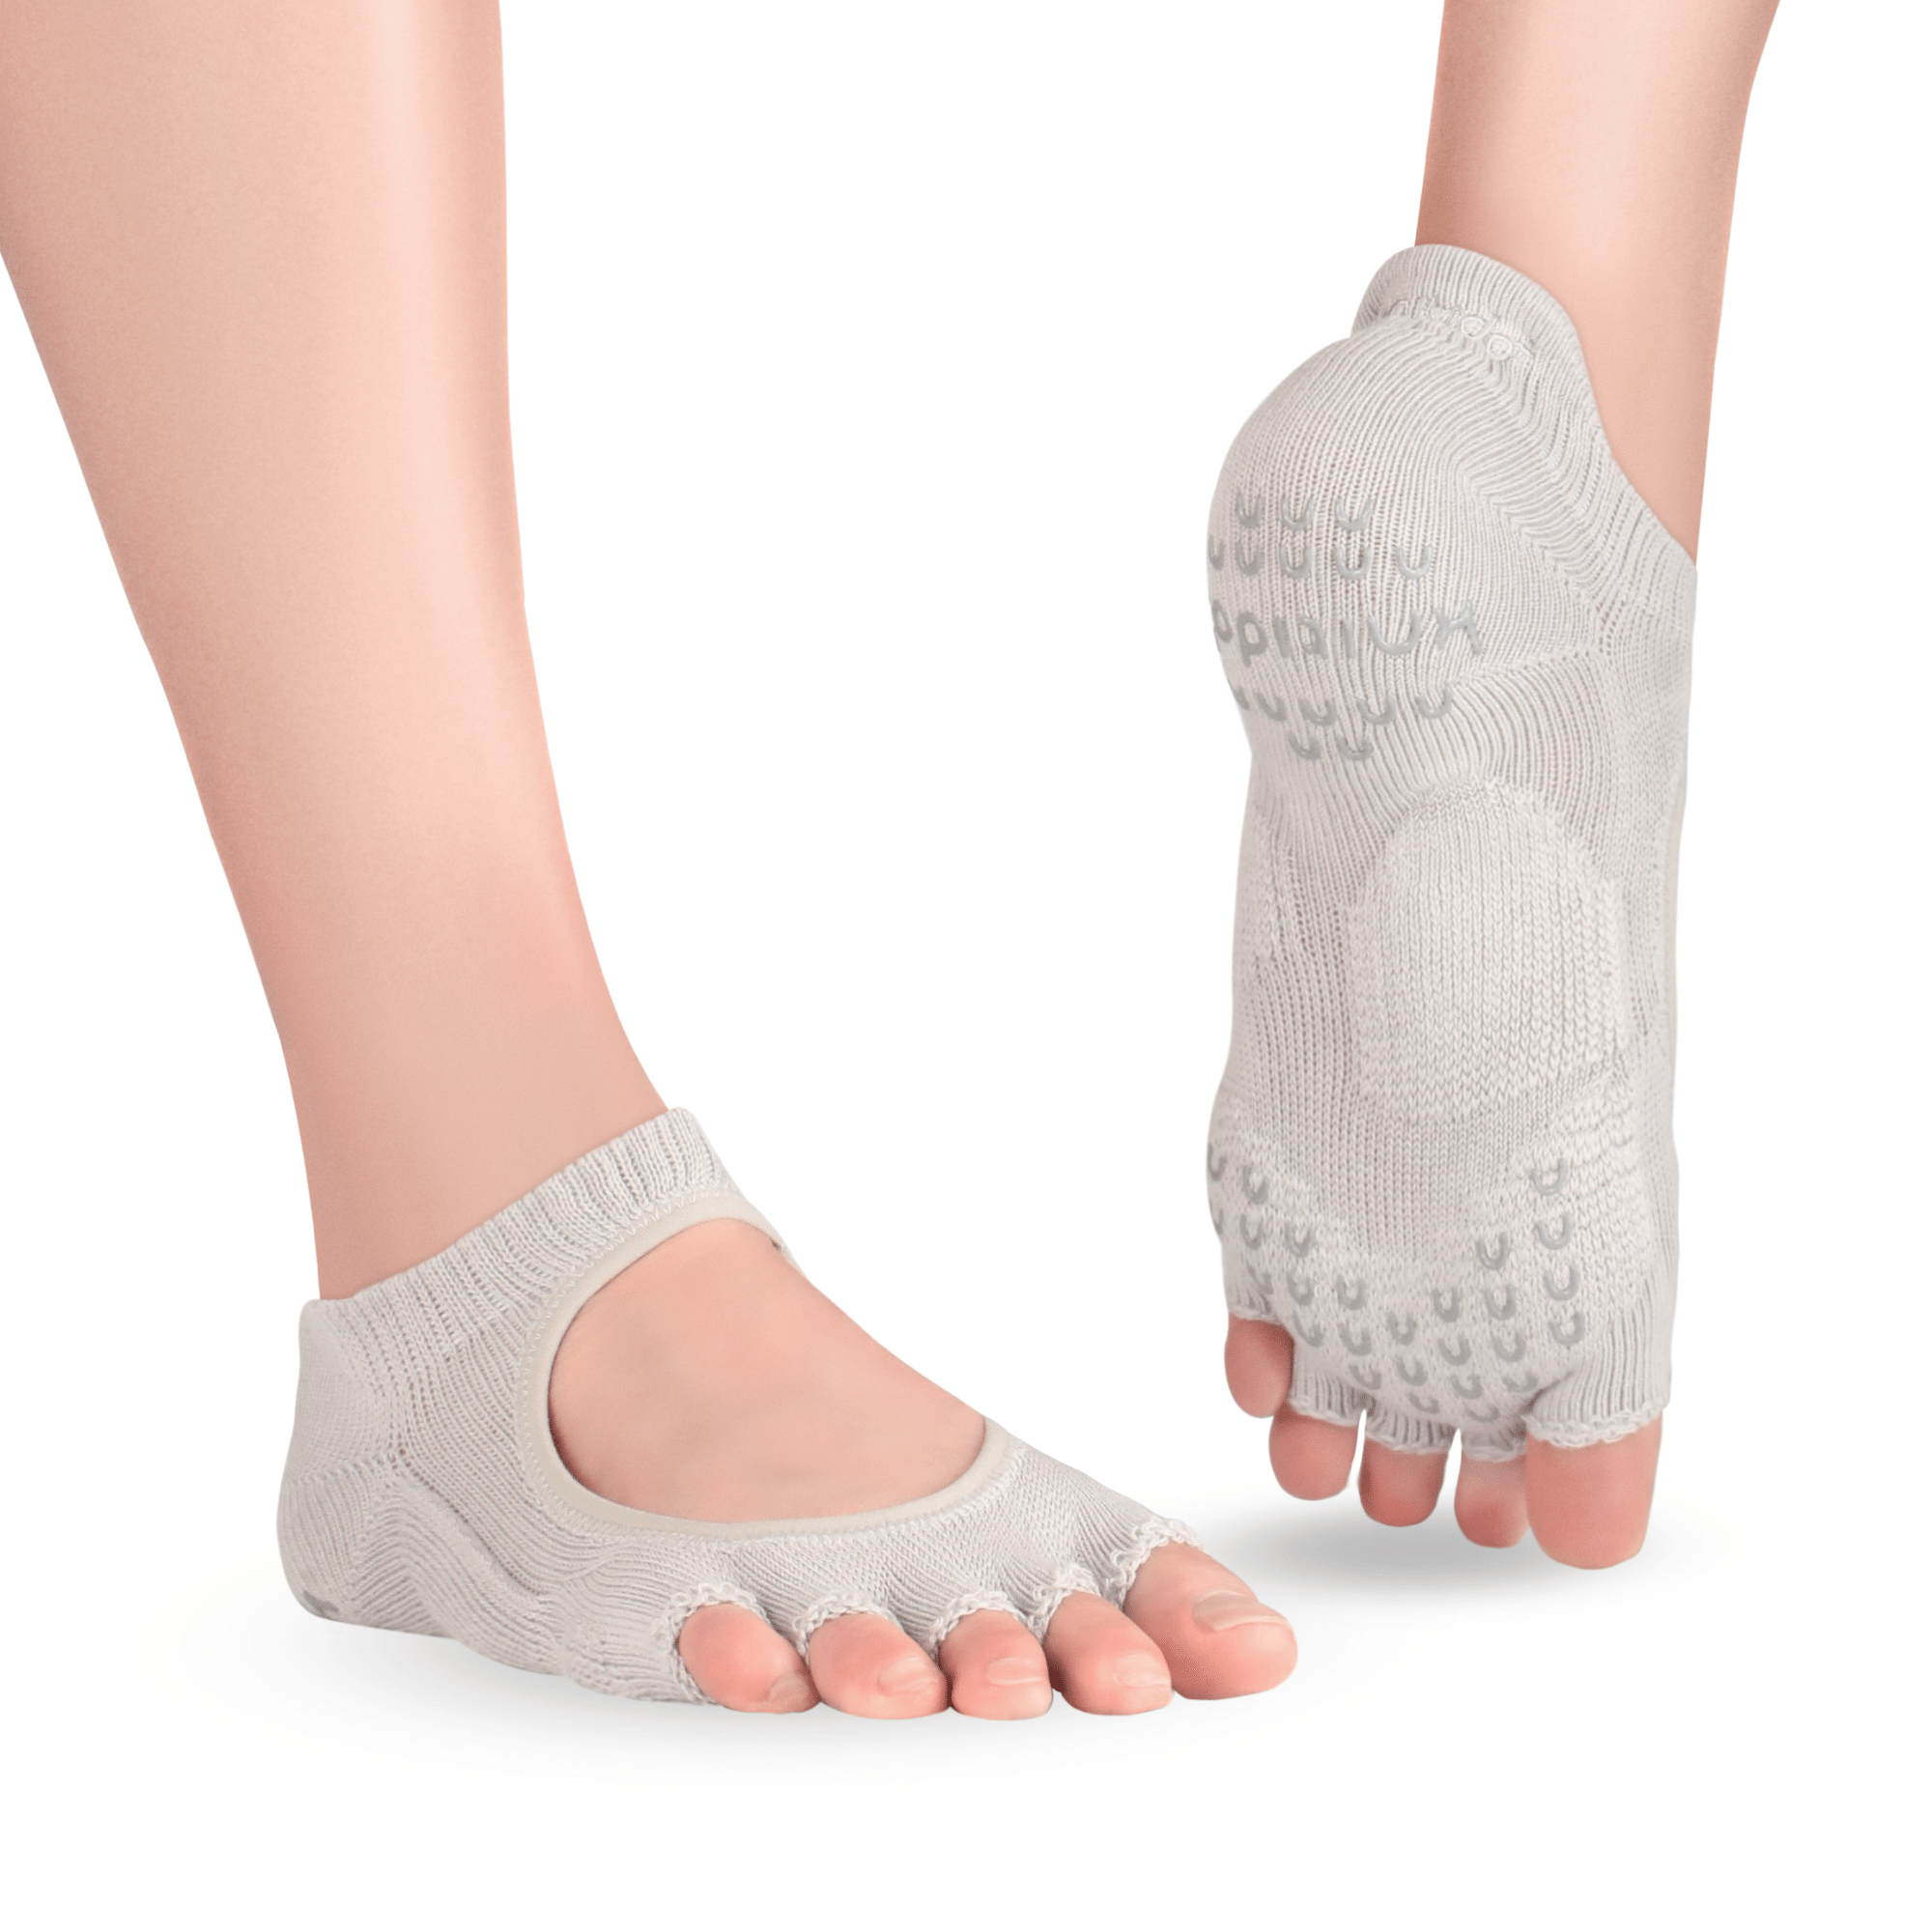 Grip Toe Socks for Yoga and Pilates, grey